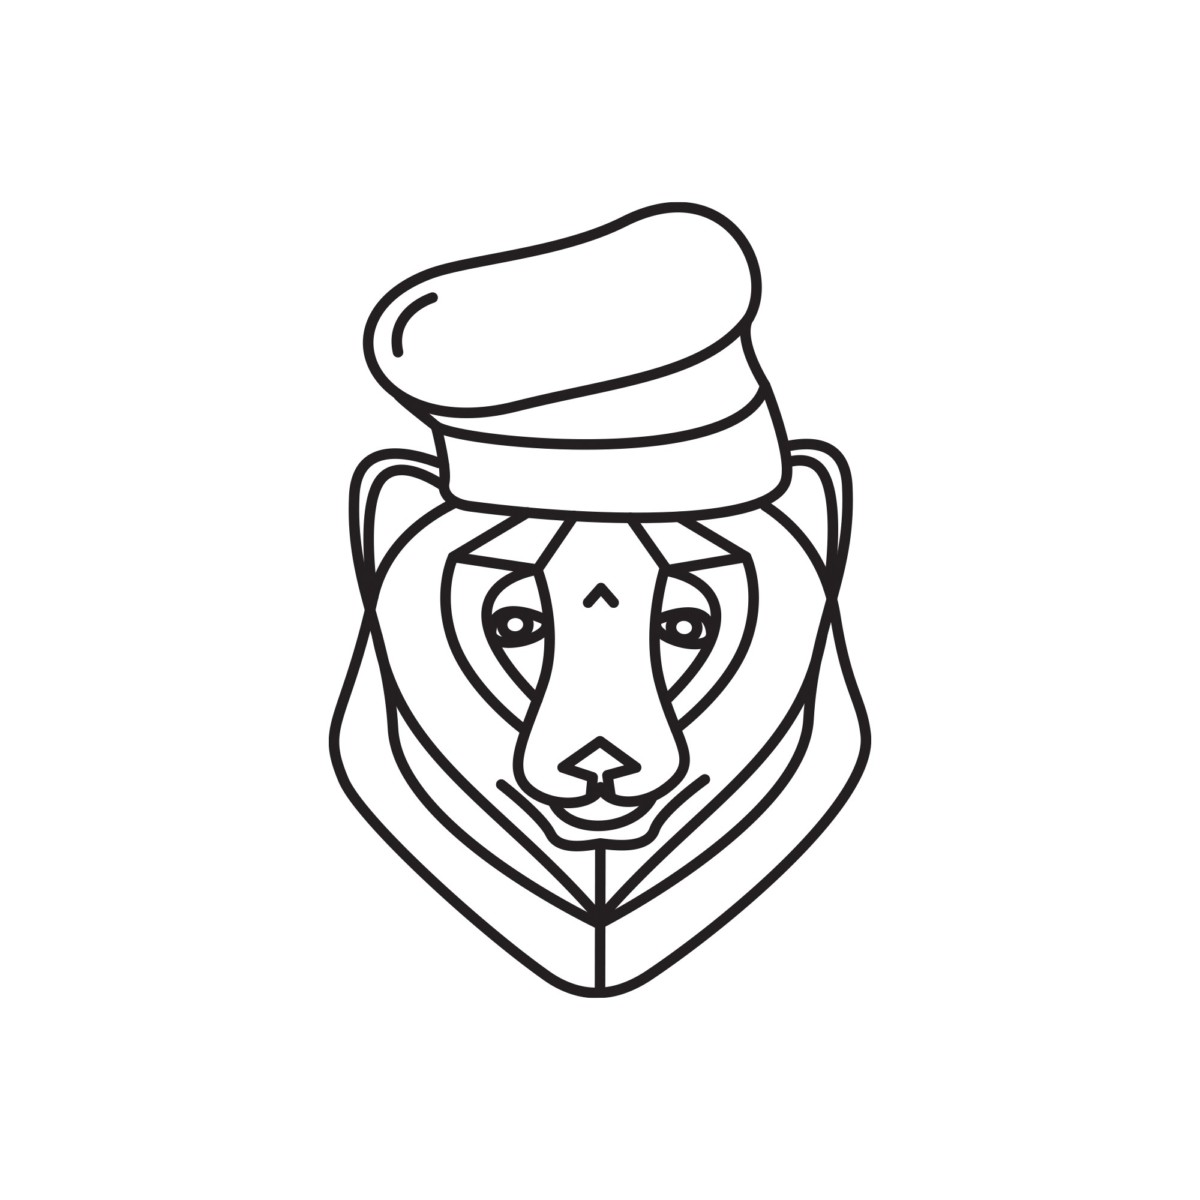 Cow by Bear logo